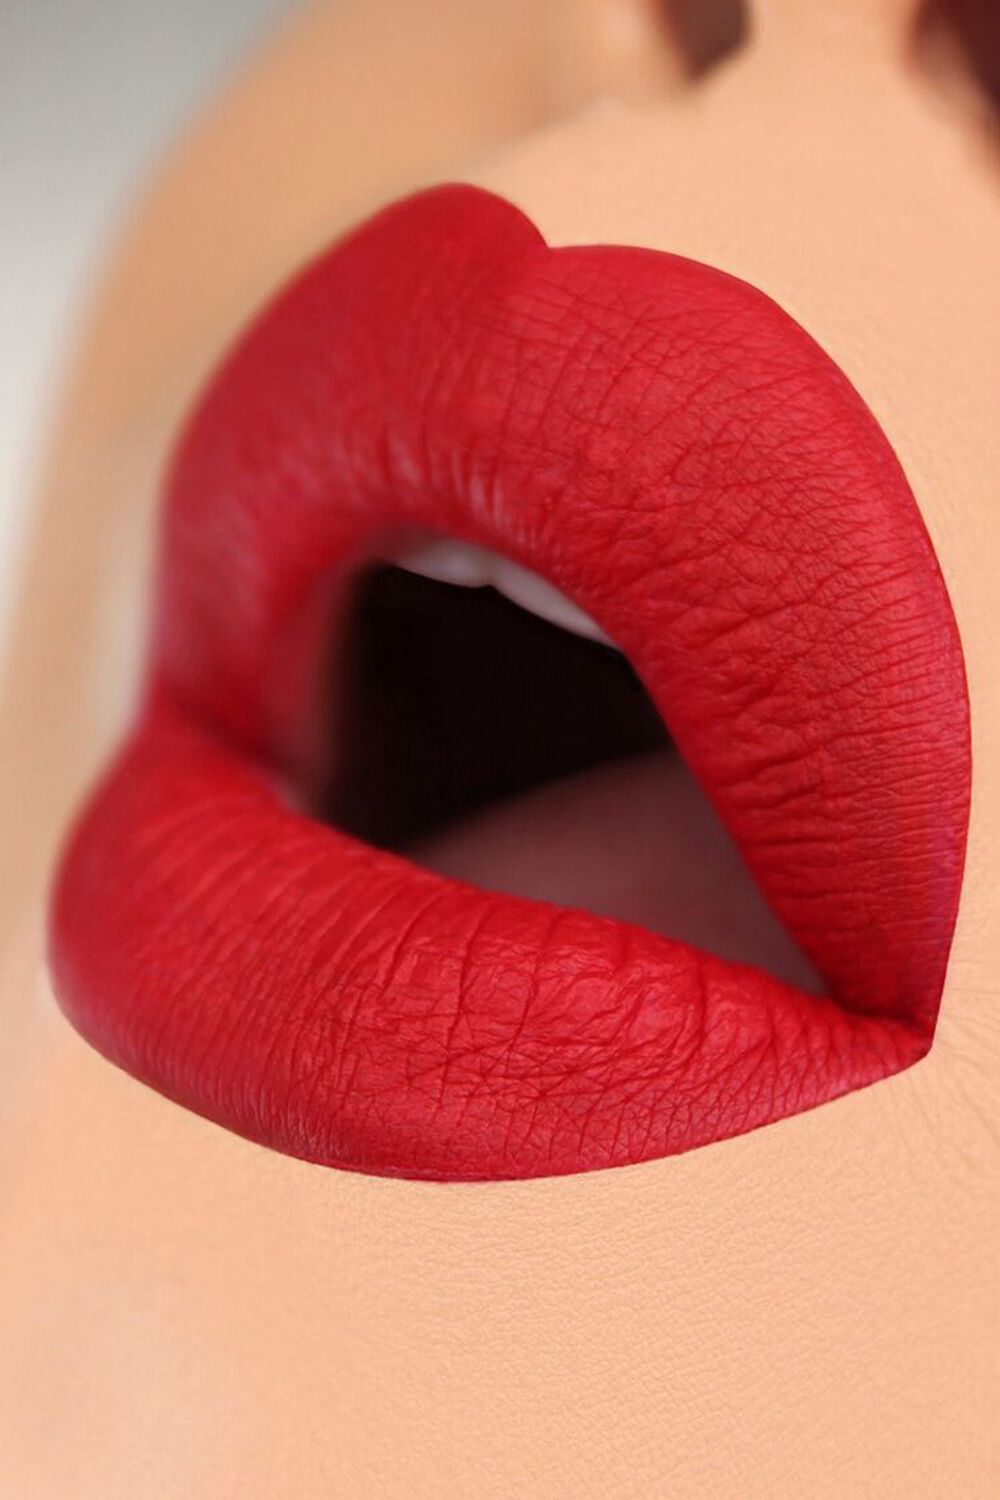 Feral x Arpi Love on Fire Liquid Matte Lipstick, image 3